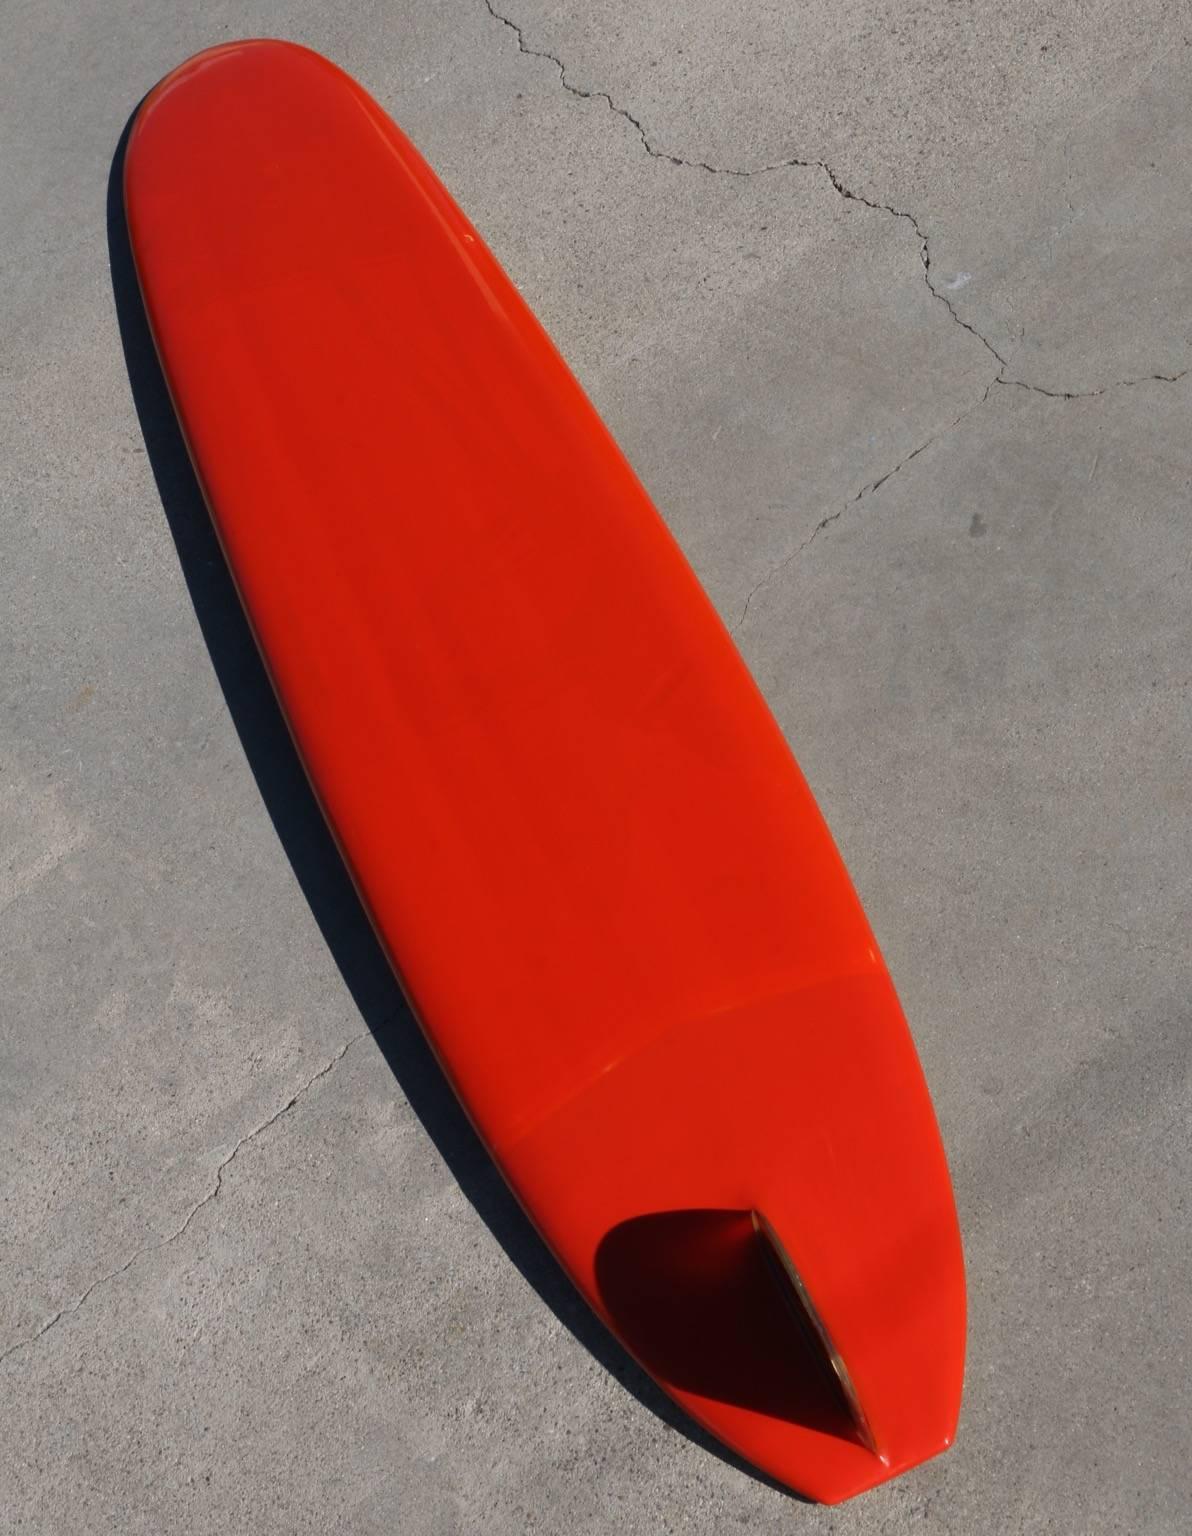 Fiberglass Duke Kahanamoku All Original 1965 Surfboard, Near Mint